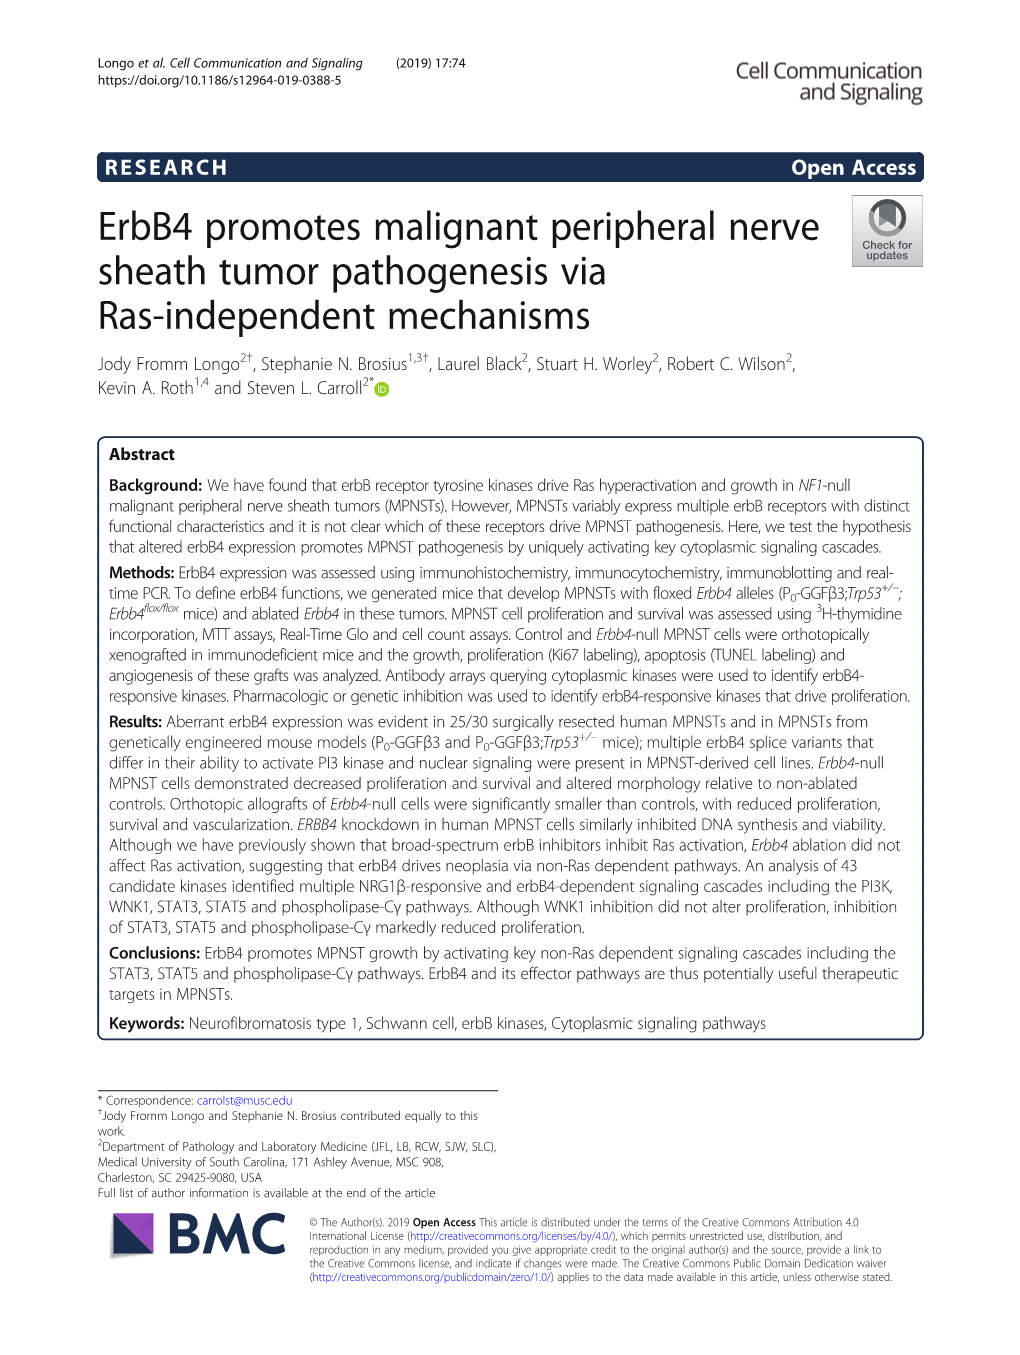 Erbb4 Promotes Malignant Peripheral Nerve Sheath Tumor Pathogenesis Via Ras-Independent Mechanisms Jody Fromm Longo2†, Stephanie N